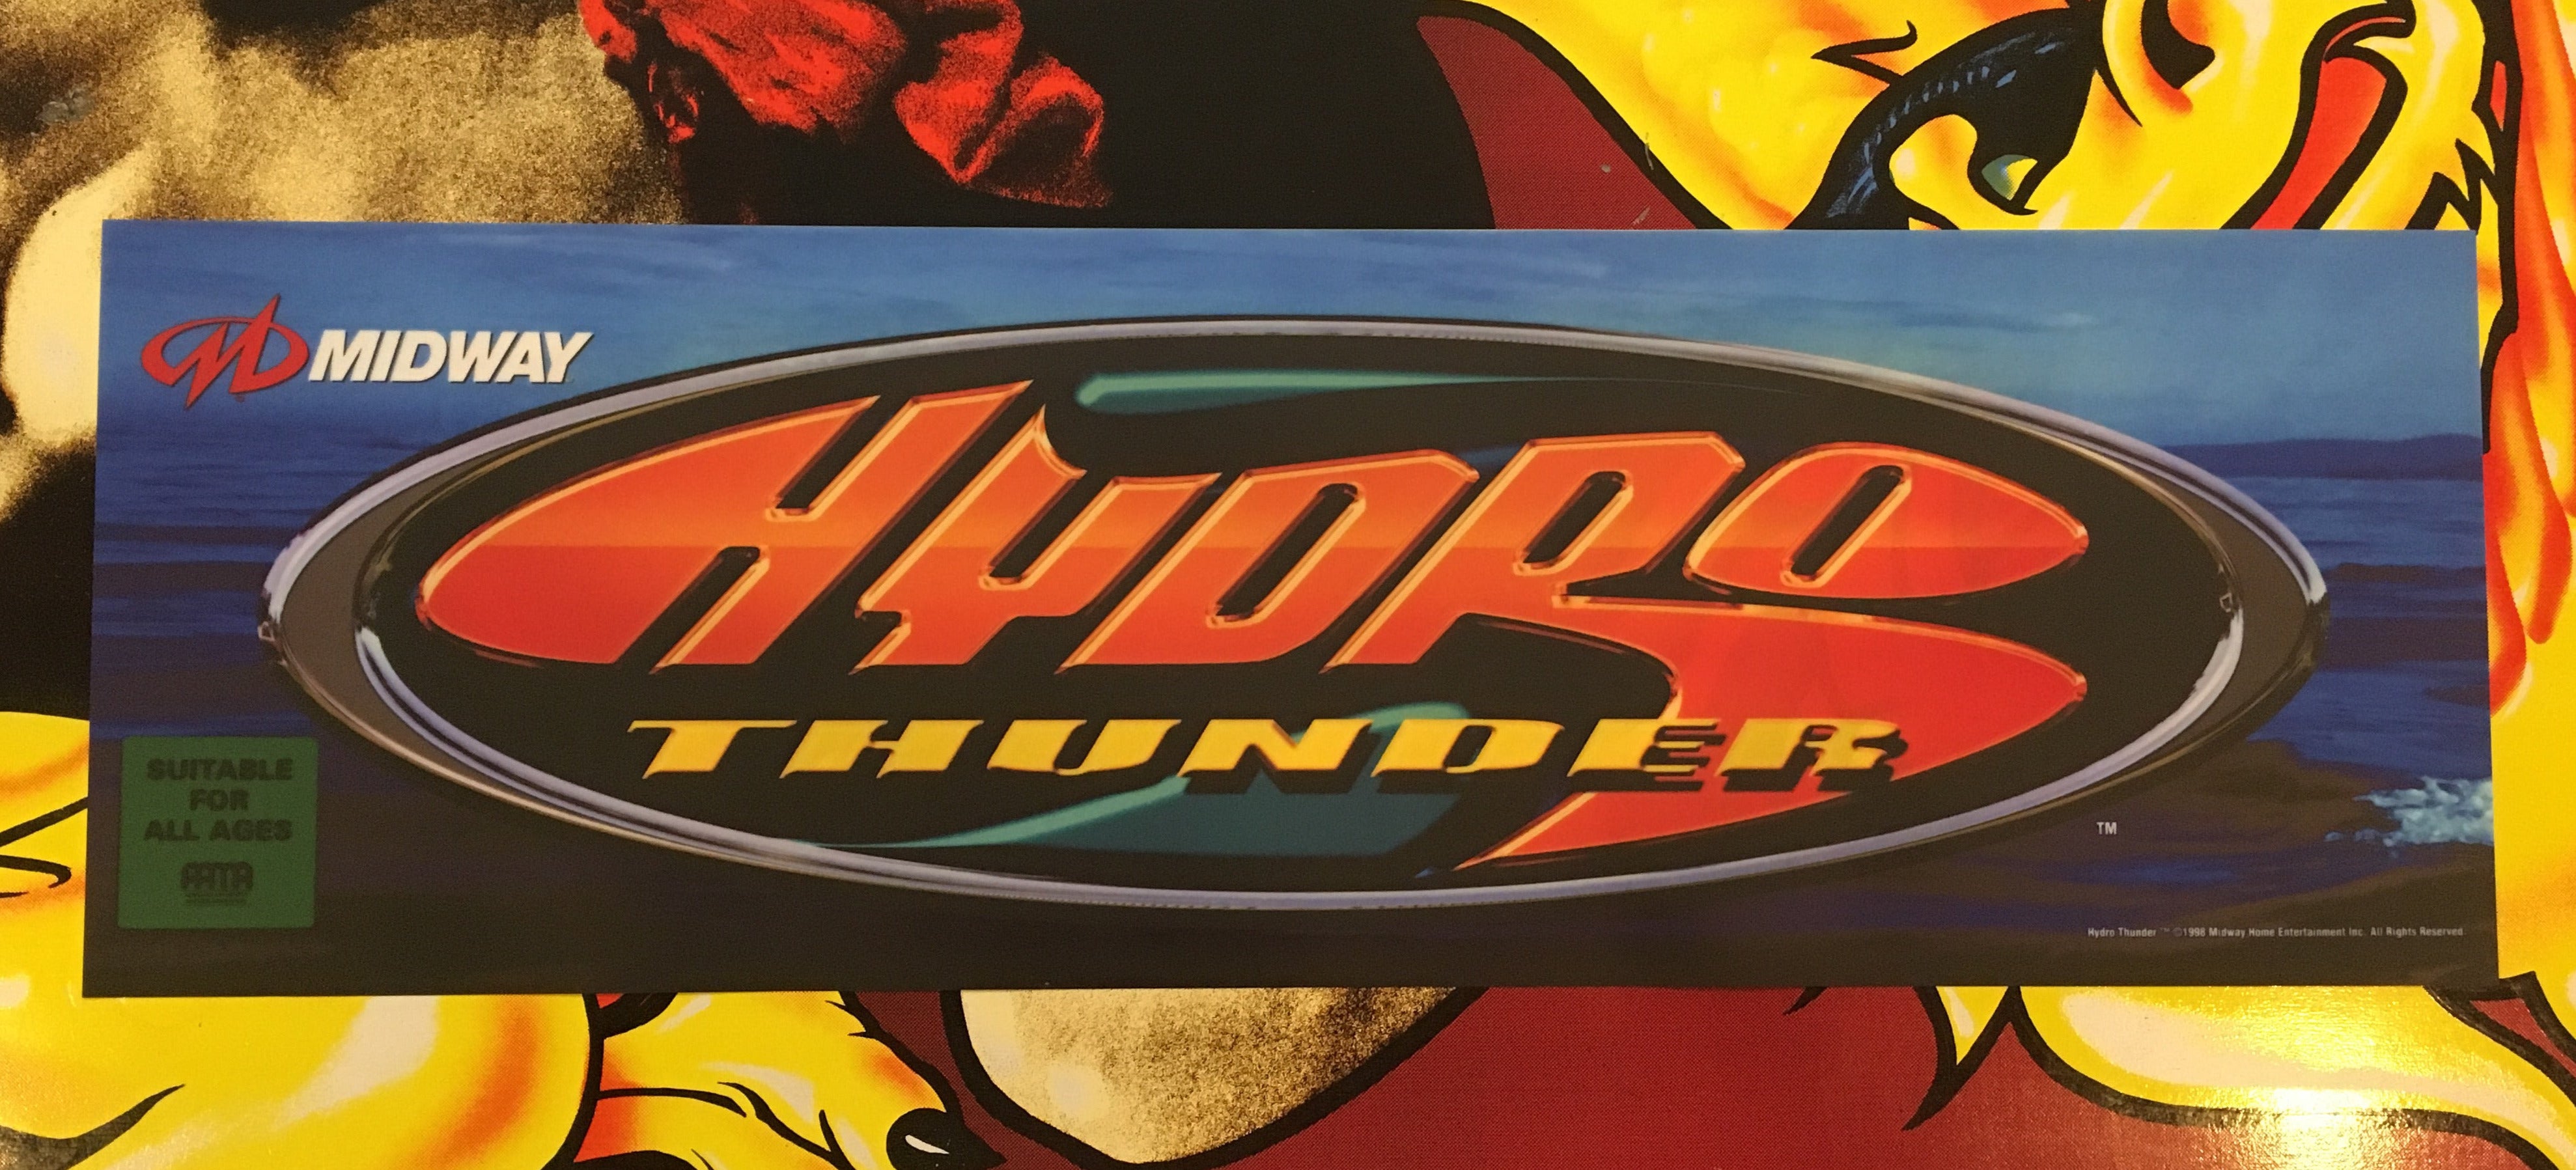 Comprar o Hydro Thunder